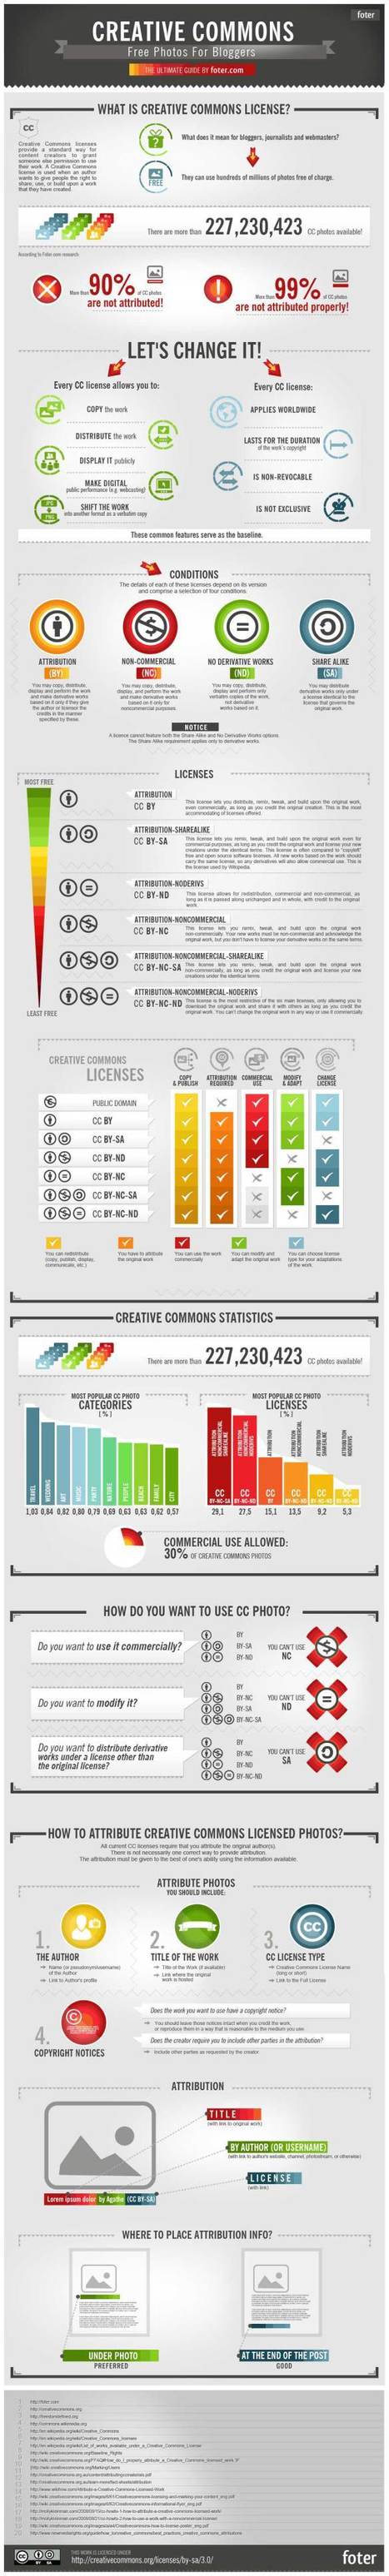 Creative Commons Infographic: Licenses Explained – An Infographic | Education & Numérique | Scoop.it